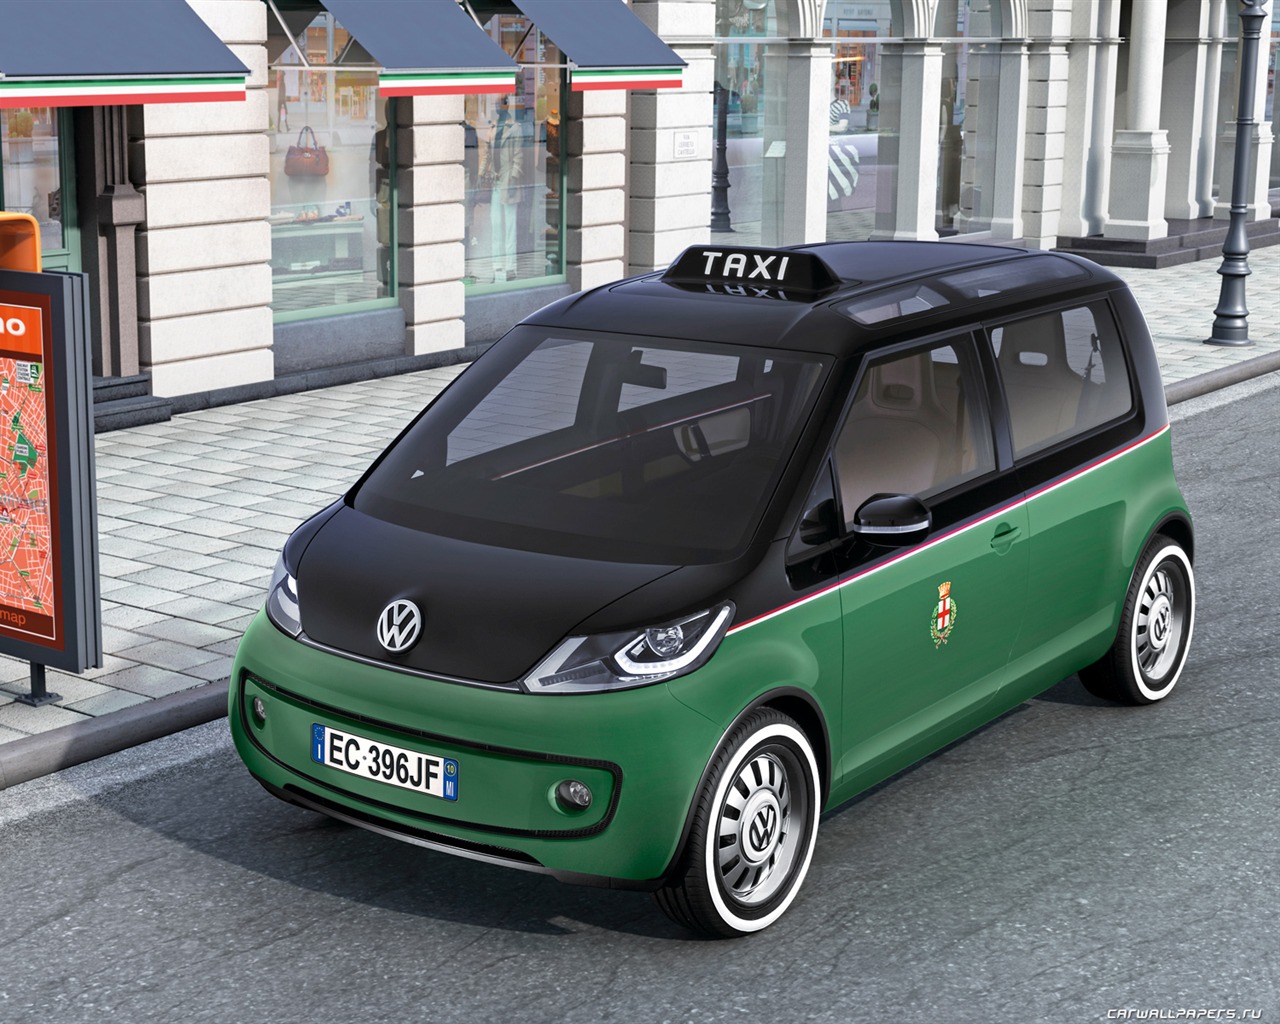 Concept Car Volkswagen Milano Taxi - 2010 大众2 - 1280x1024